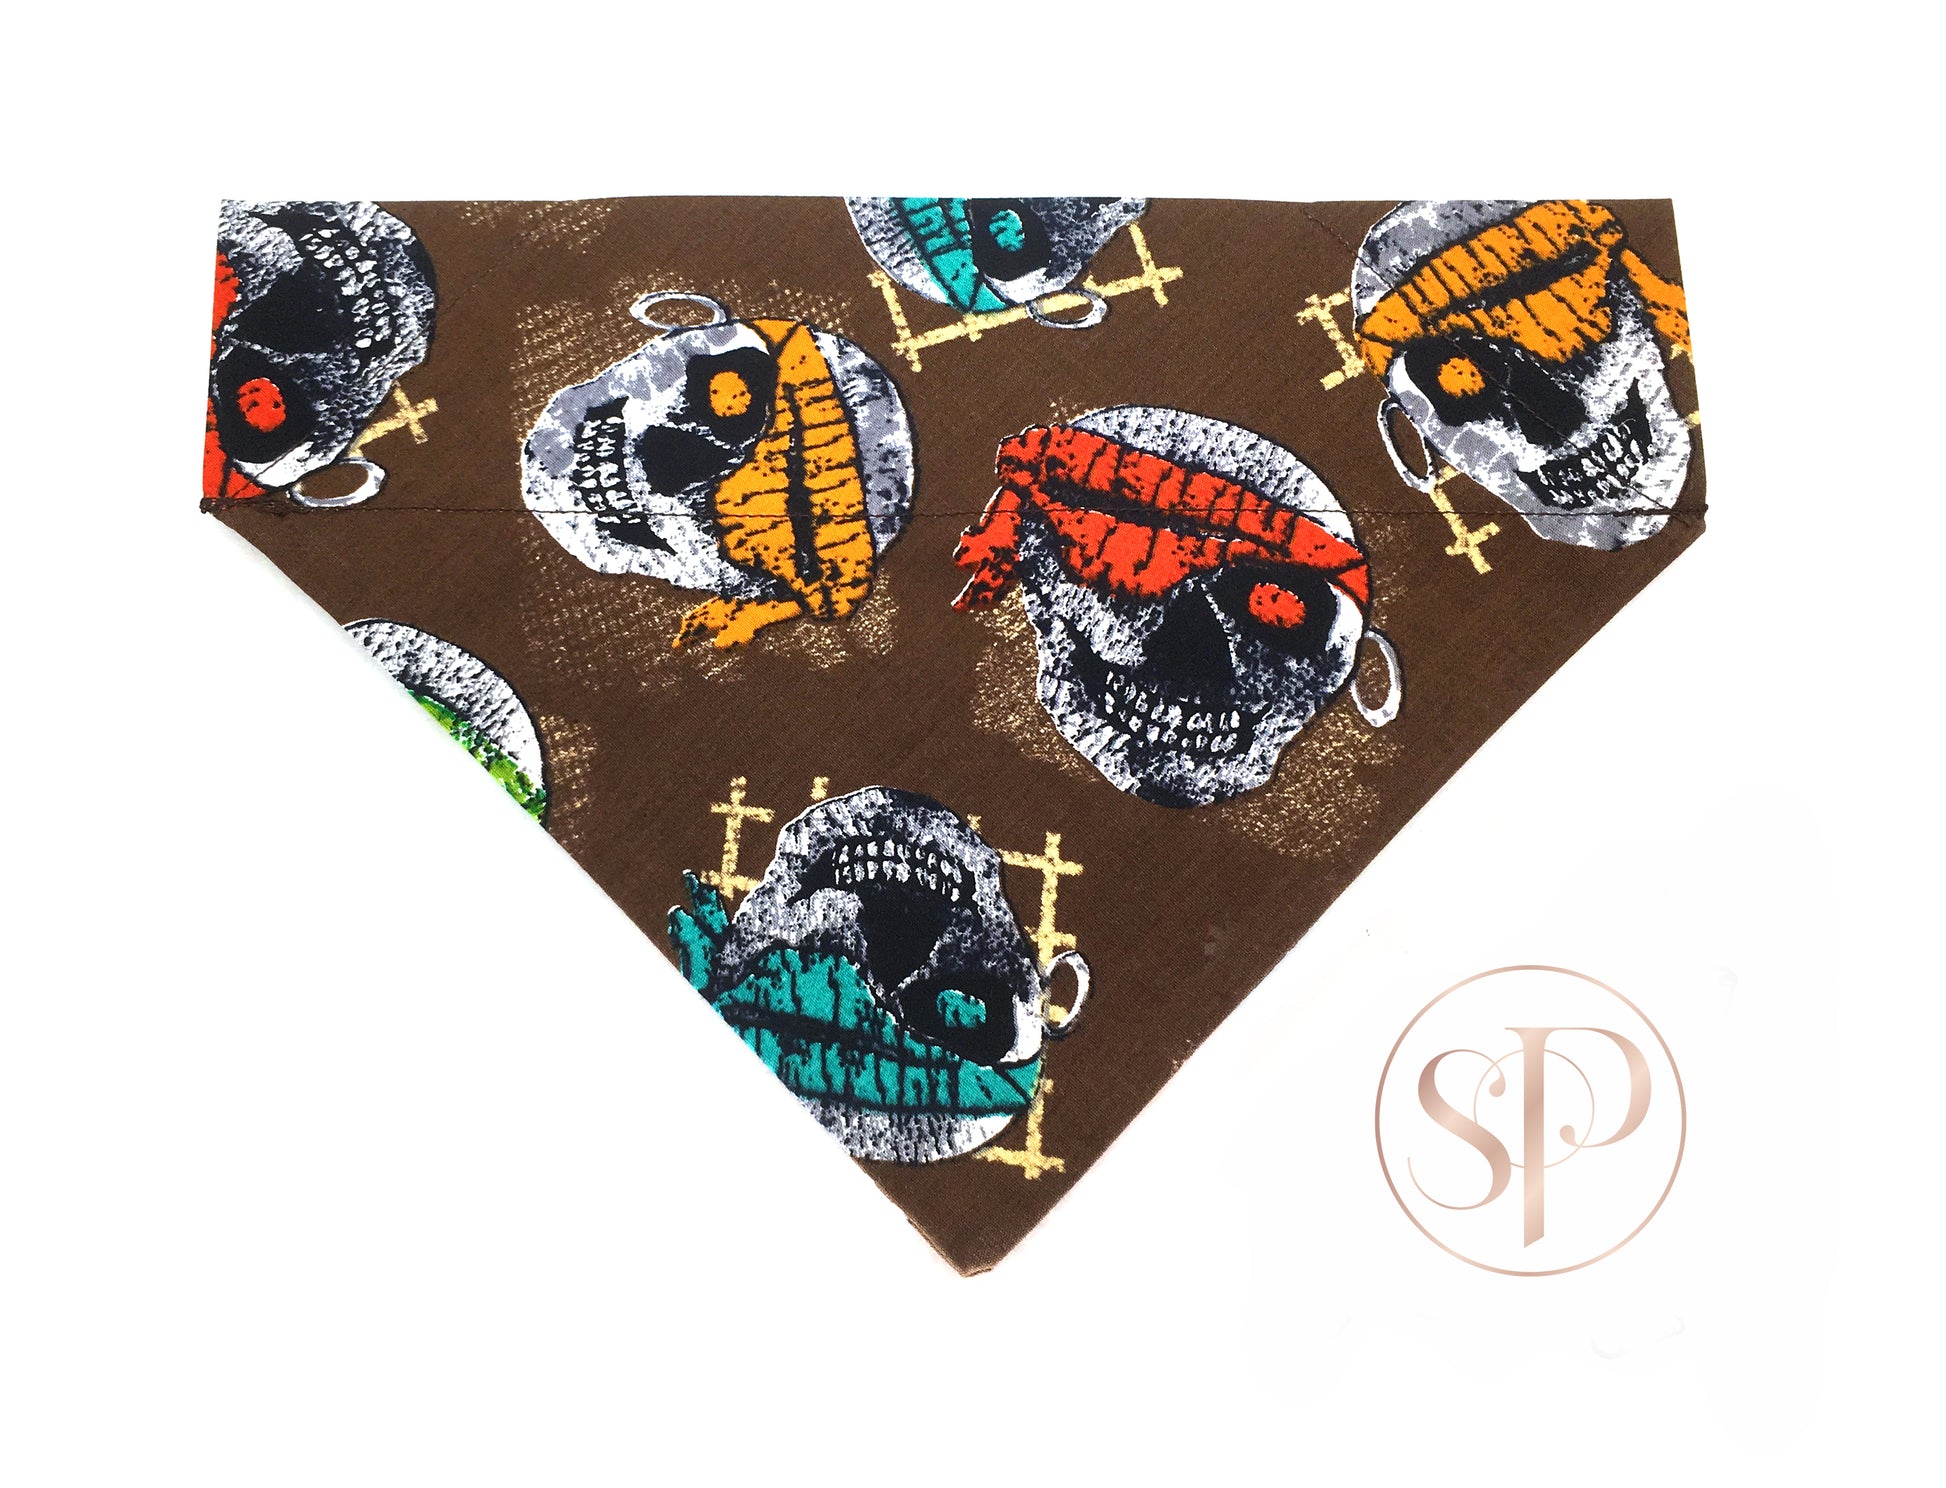 Spooky Halloween slide-on bandana with pirate skull design.